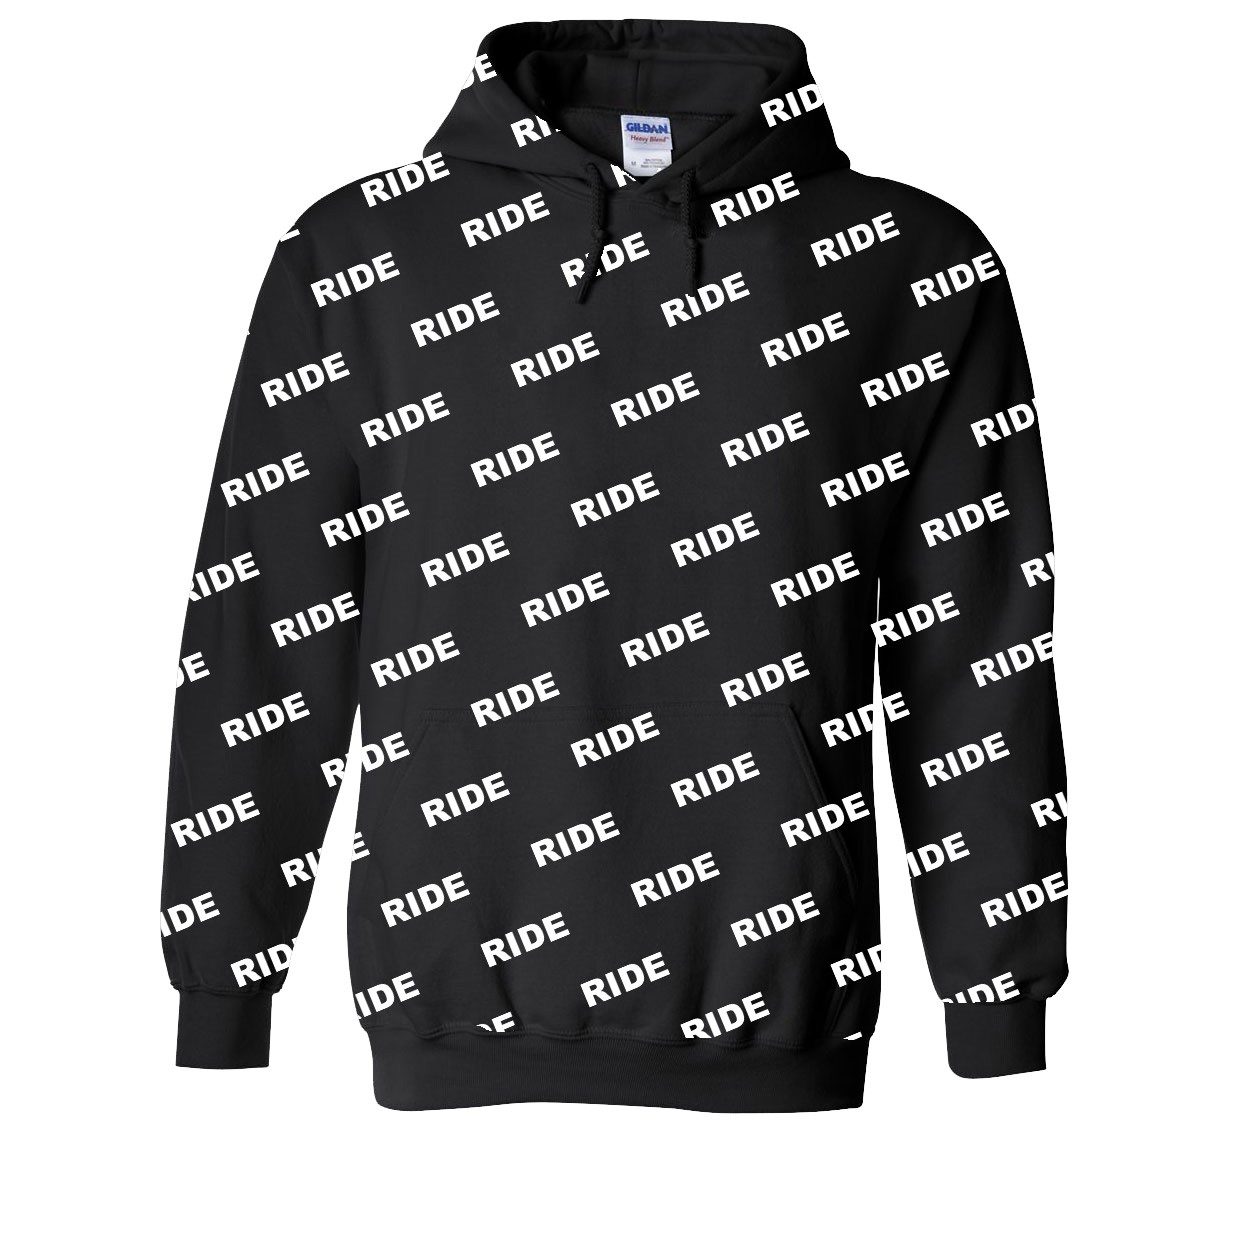 Ride Brand Logo Pro Patterned Sublimated Hooded Sweatshirt Black 